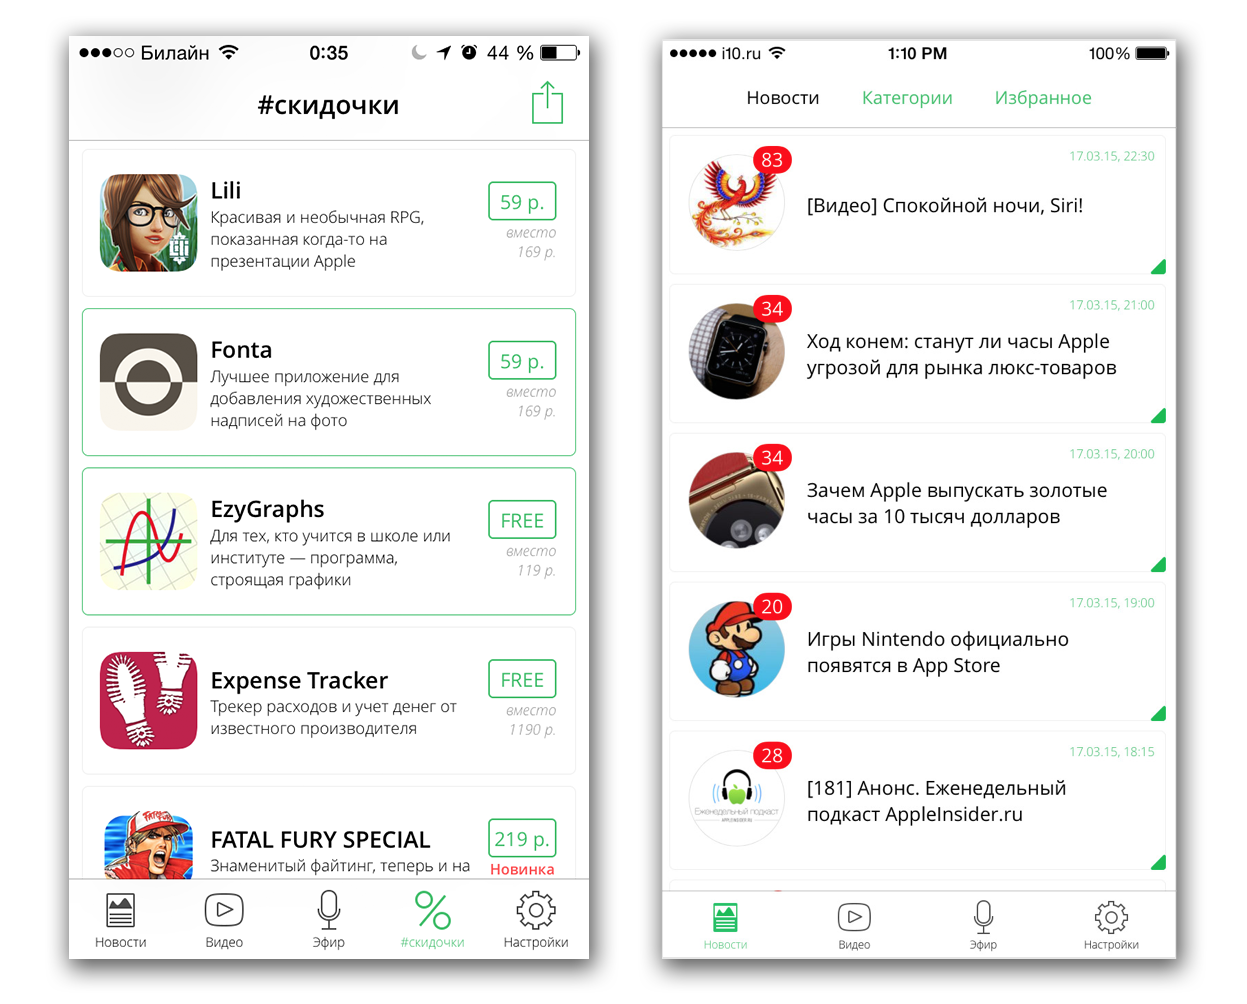 AppleInsider.ru: App Store цензурирует СМИ со слухами про Apple, о конкурентах, о разблочке - 2